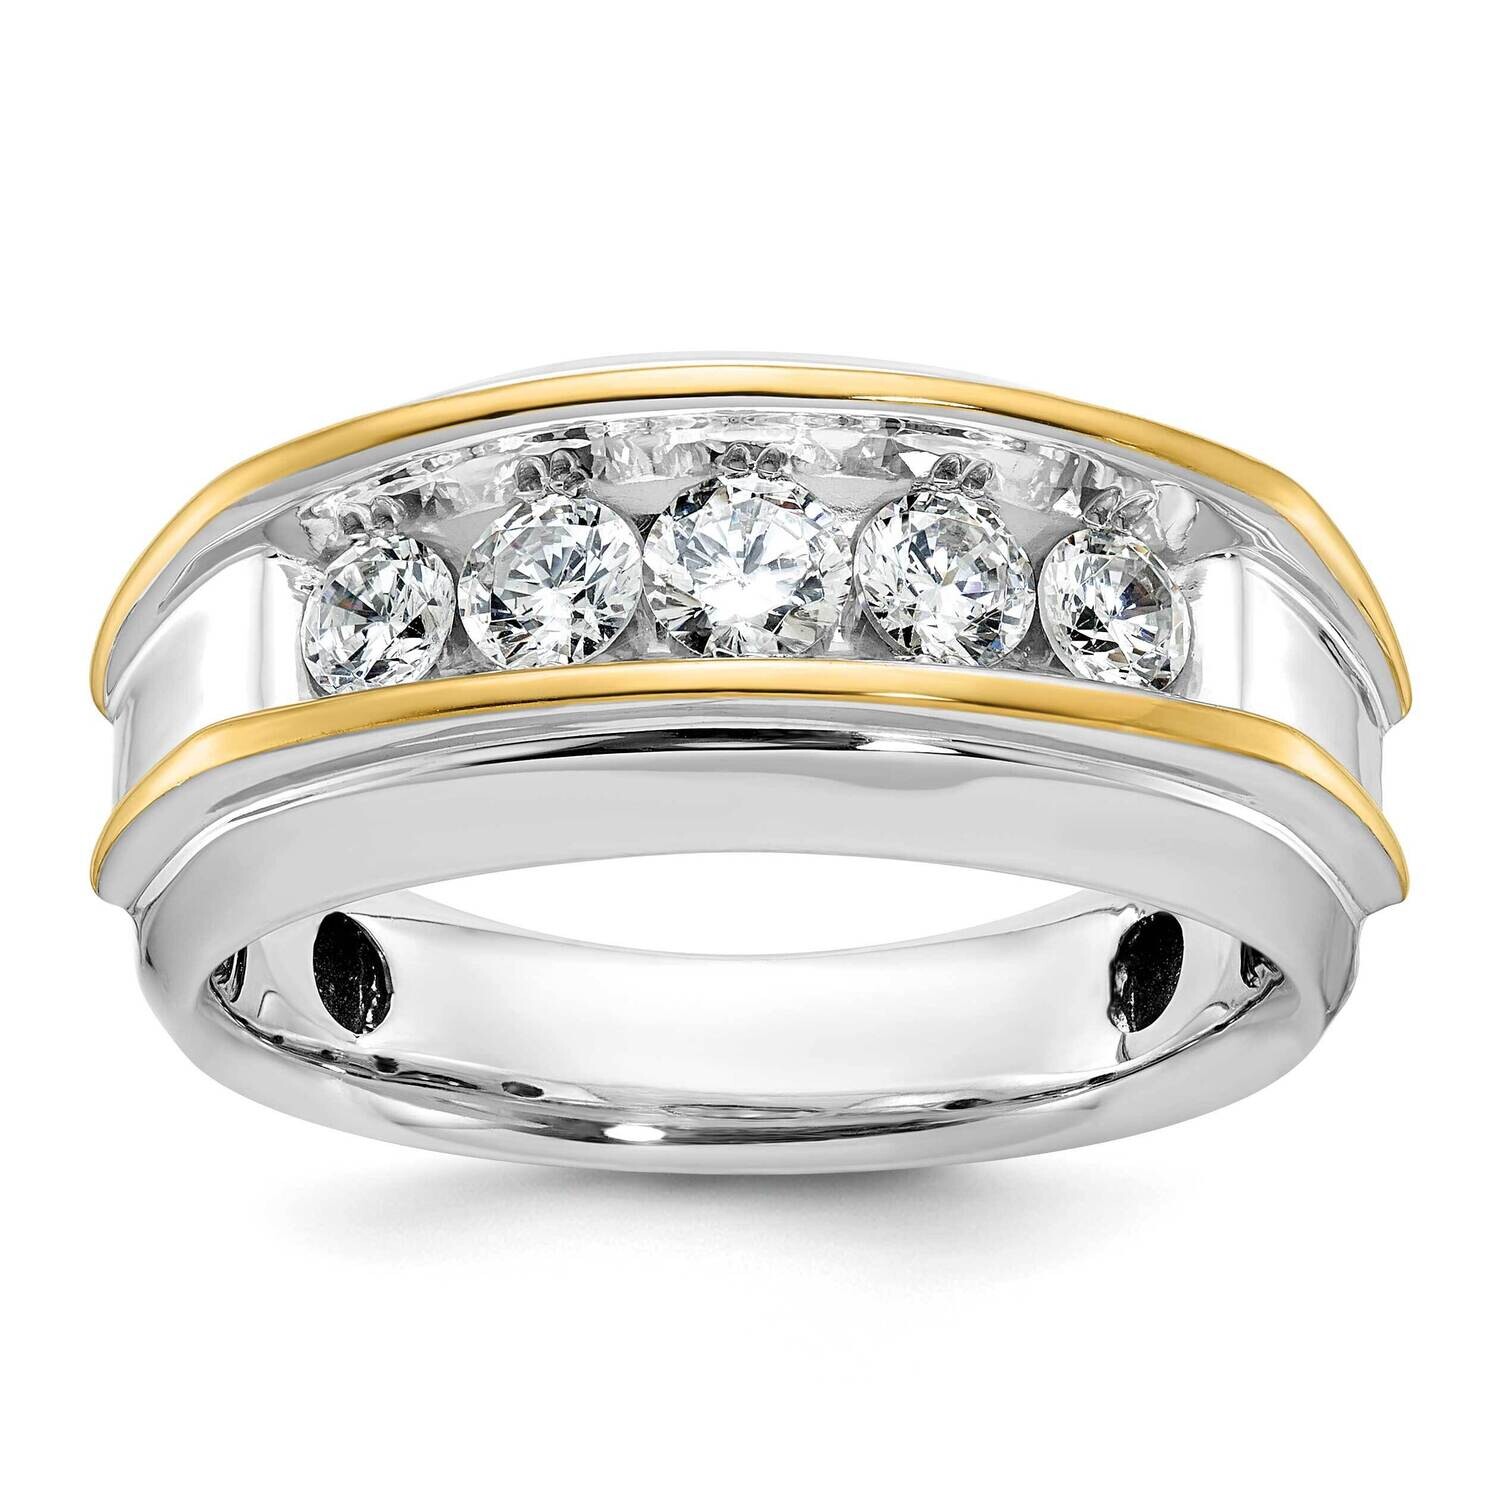 Ibgoodman Men's Polished 5-Stone 1 Carat Aa Quality Diamond Ring 14k Two-Tone Gold B63686-4WYAA